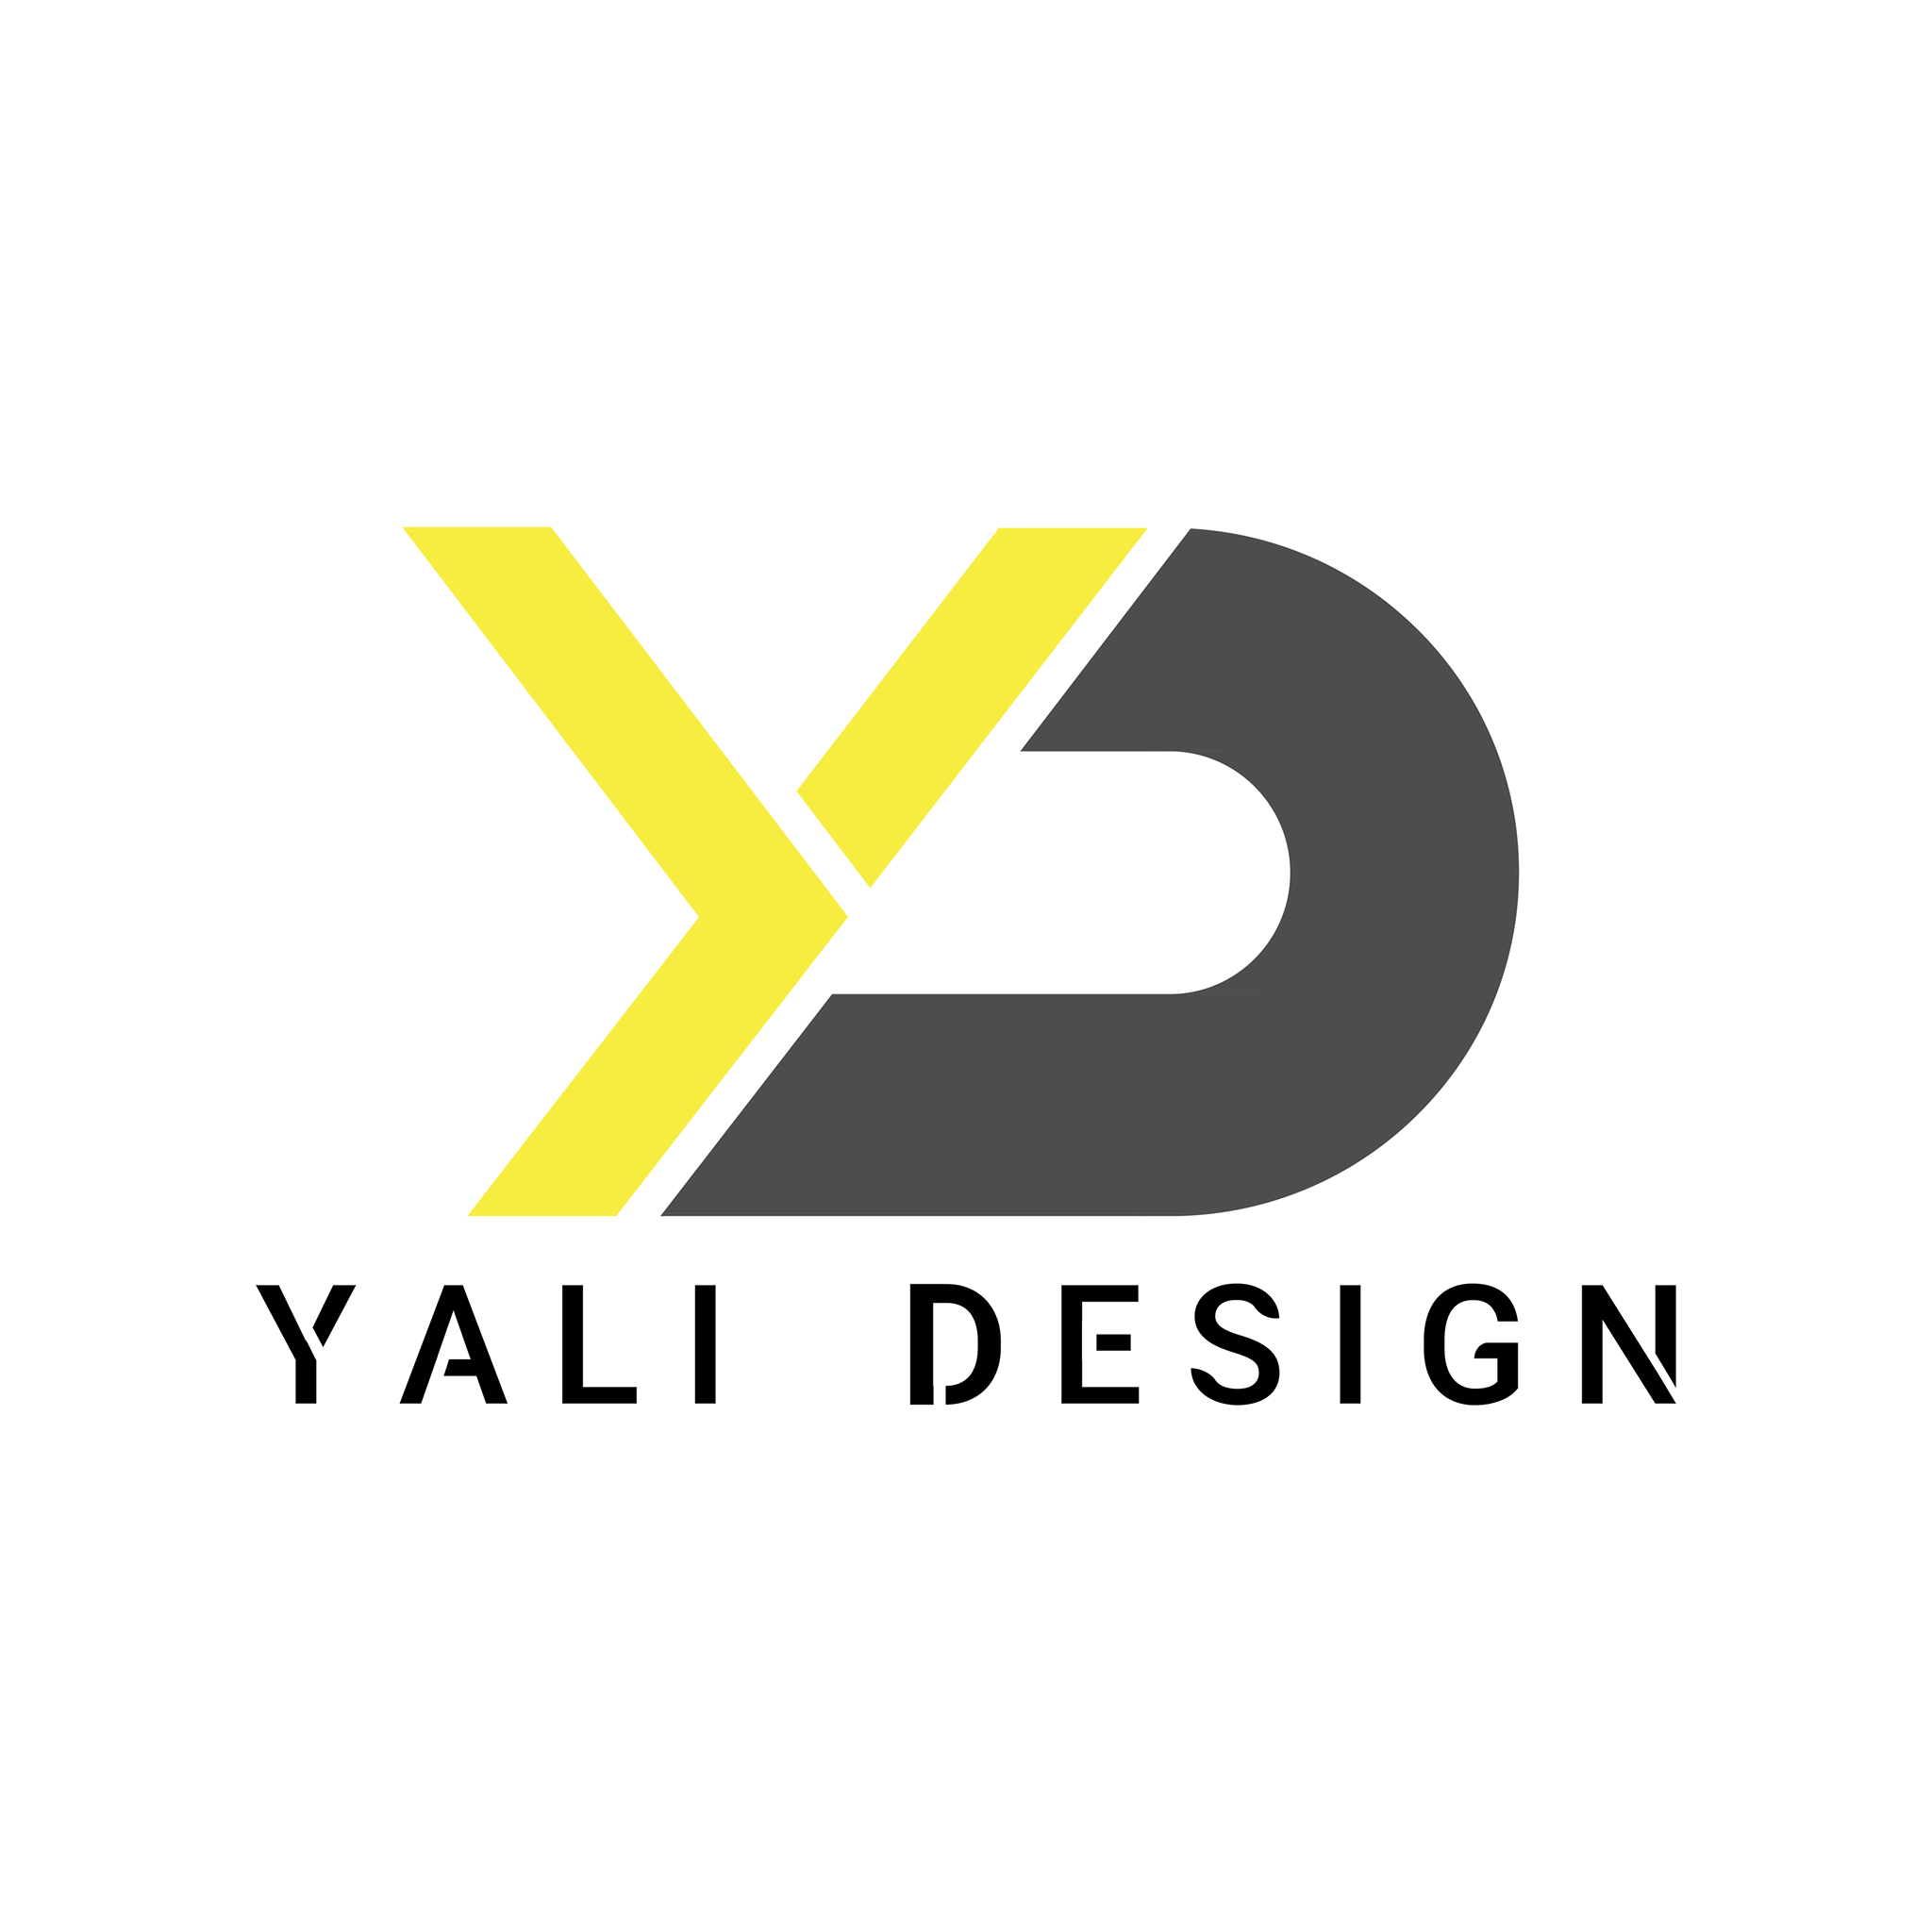 YALI DESIGN & INTERIORS|Architect|Professional Services